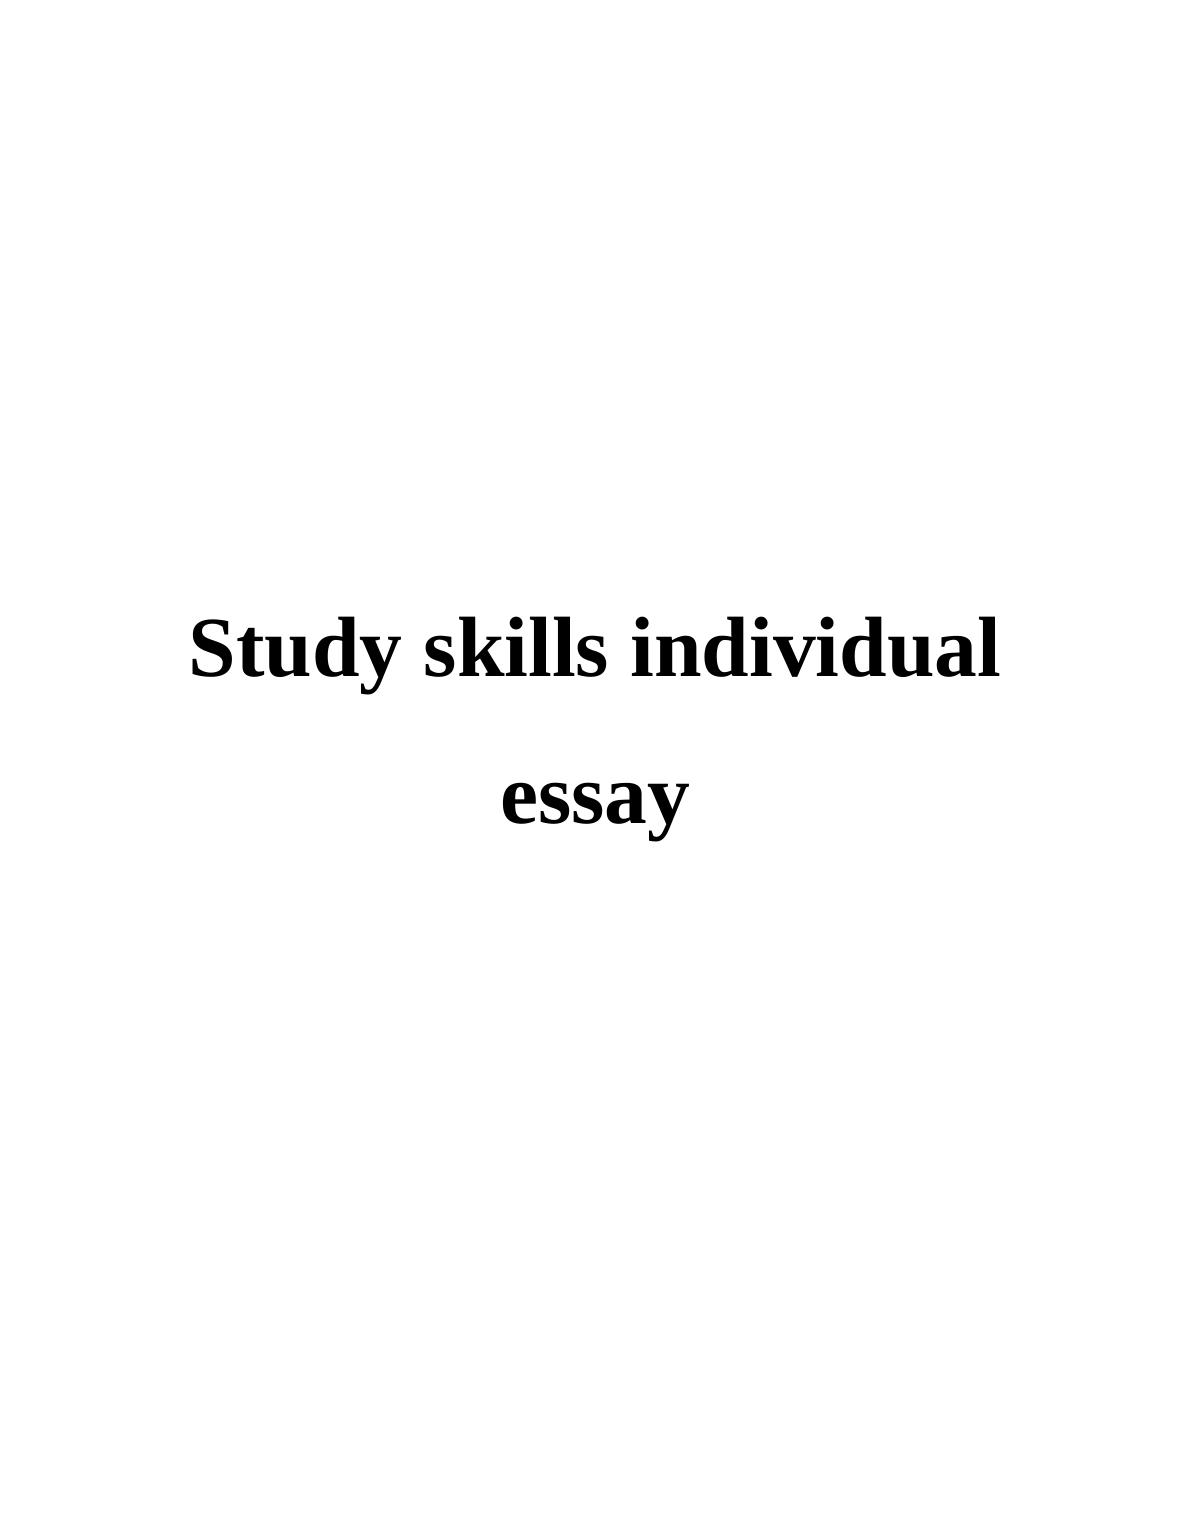 Essay on Study skills individual Assignment_1